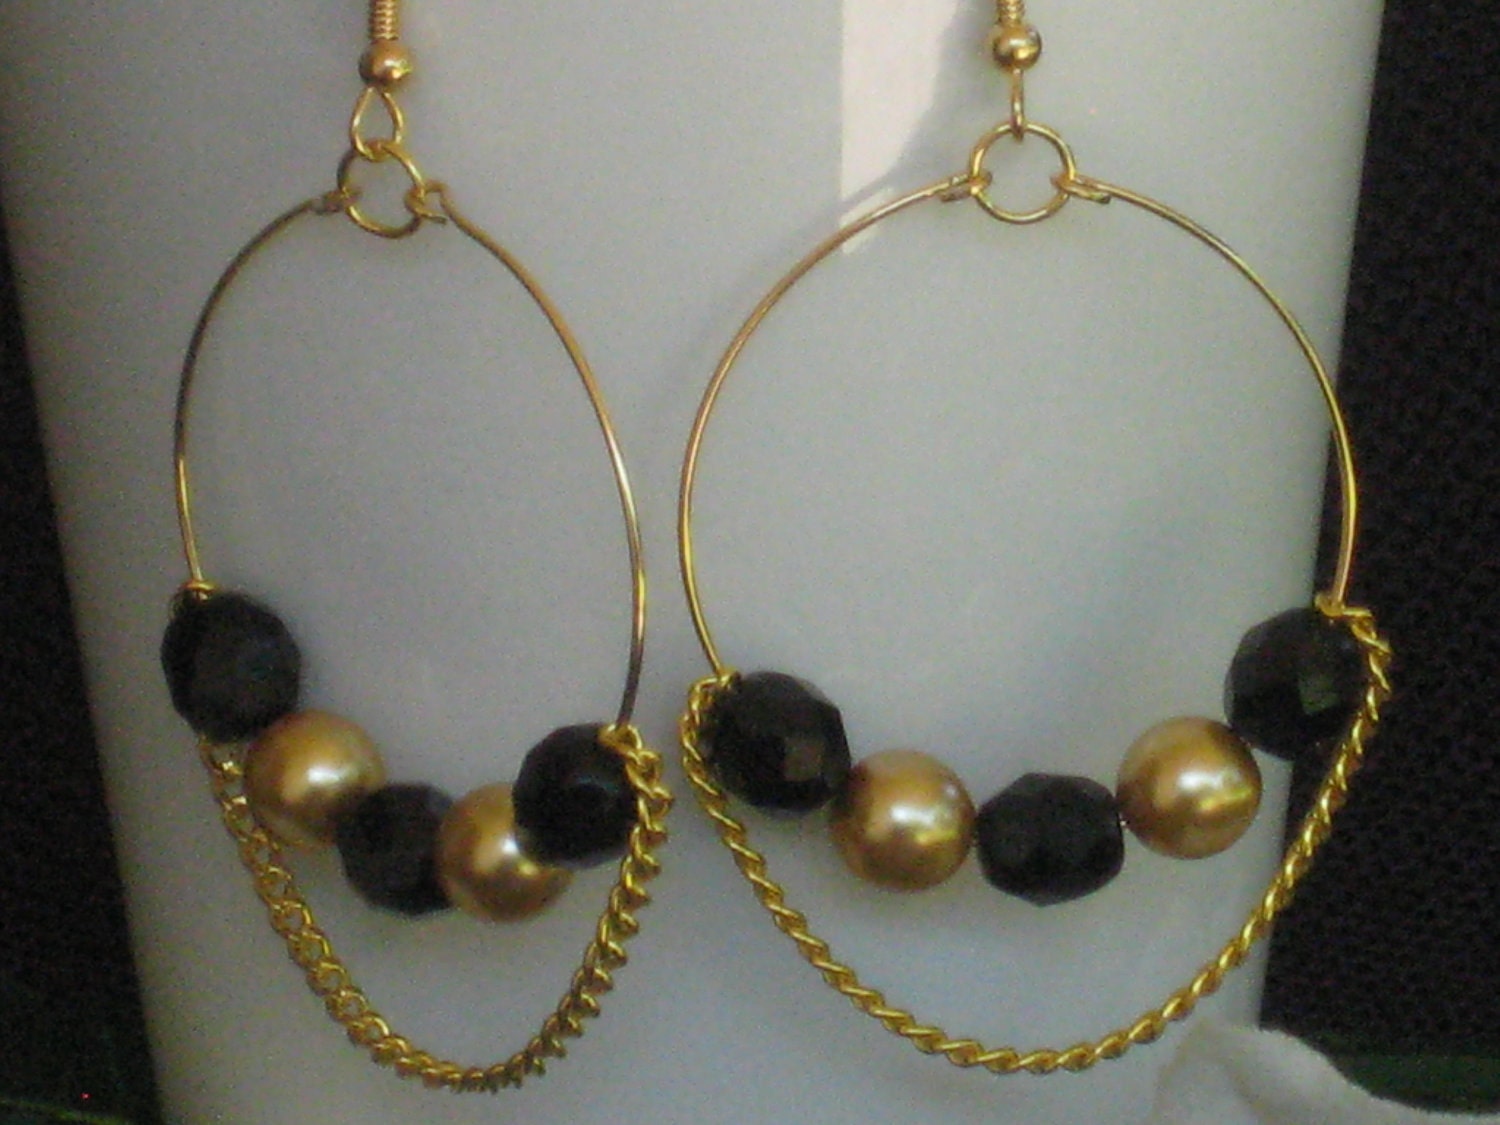 SALE: Black and Gold Beaded Chain Hoop Earrings